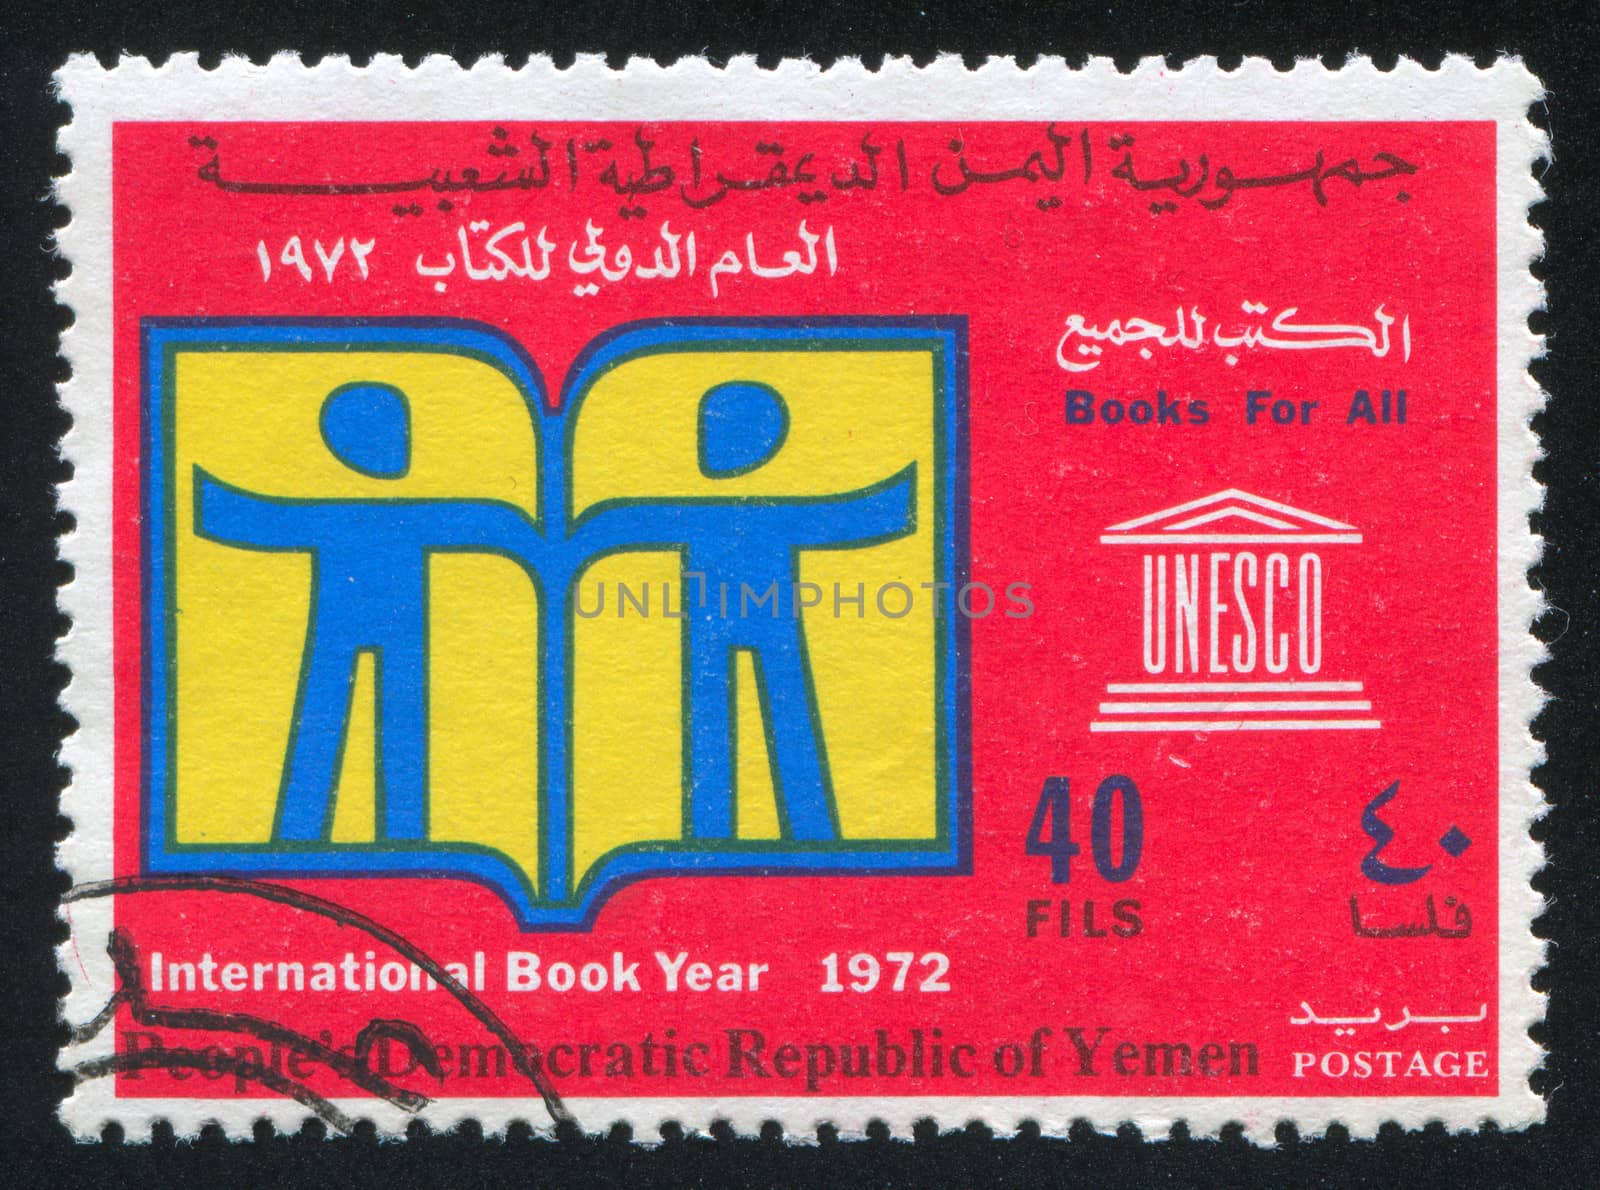 YEMEN - CIRCA 1972: stamp printed by Yemen, shows Book Year Emblem, circa 1972